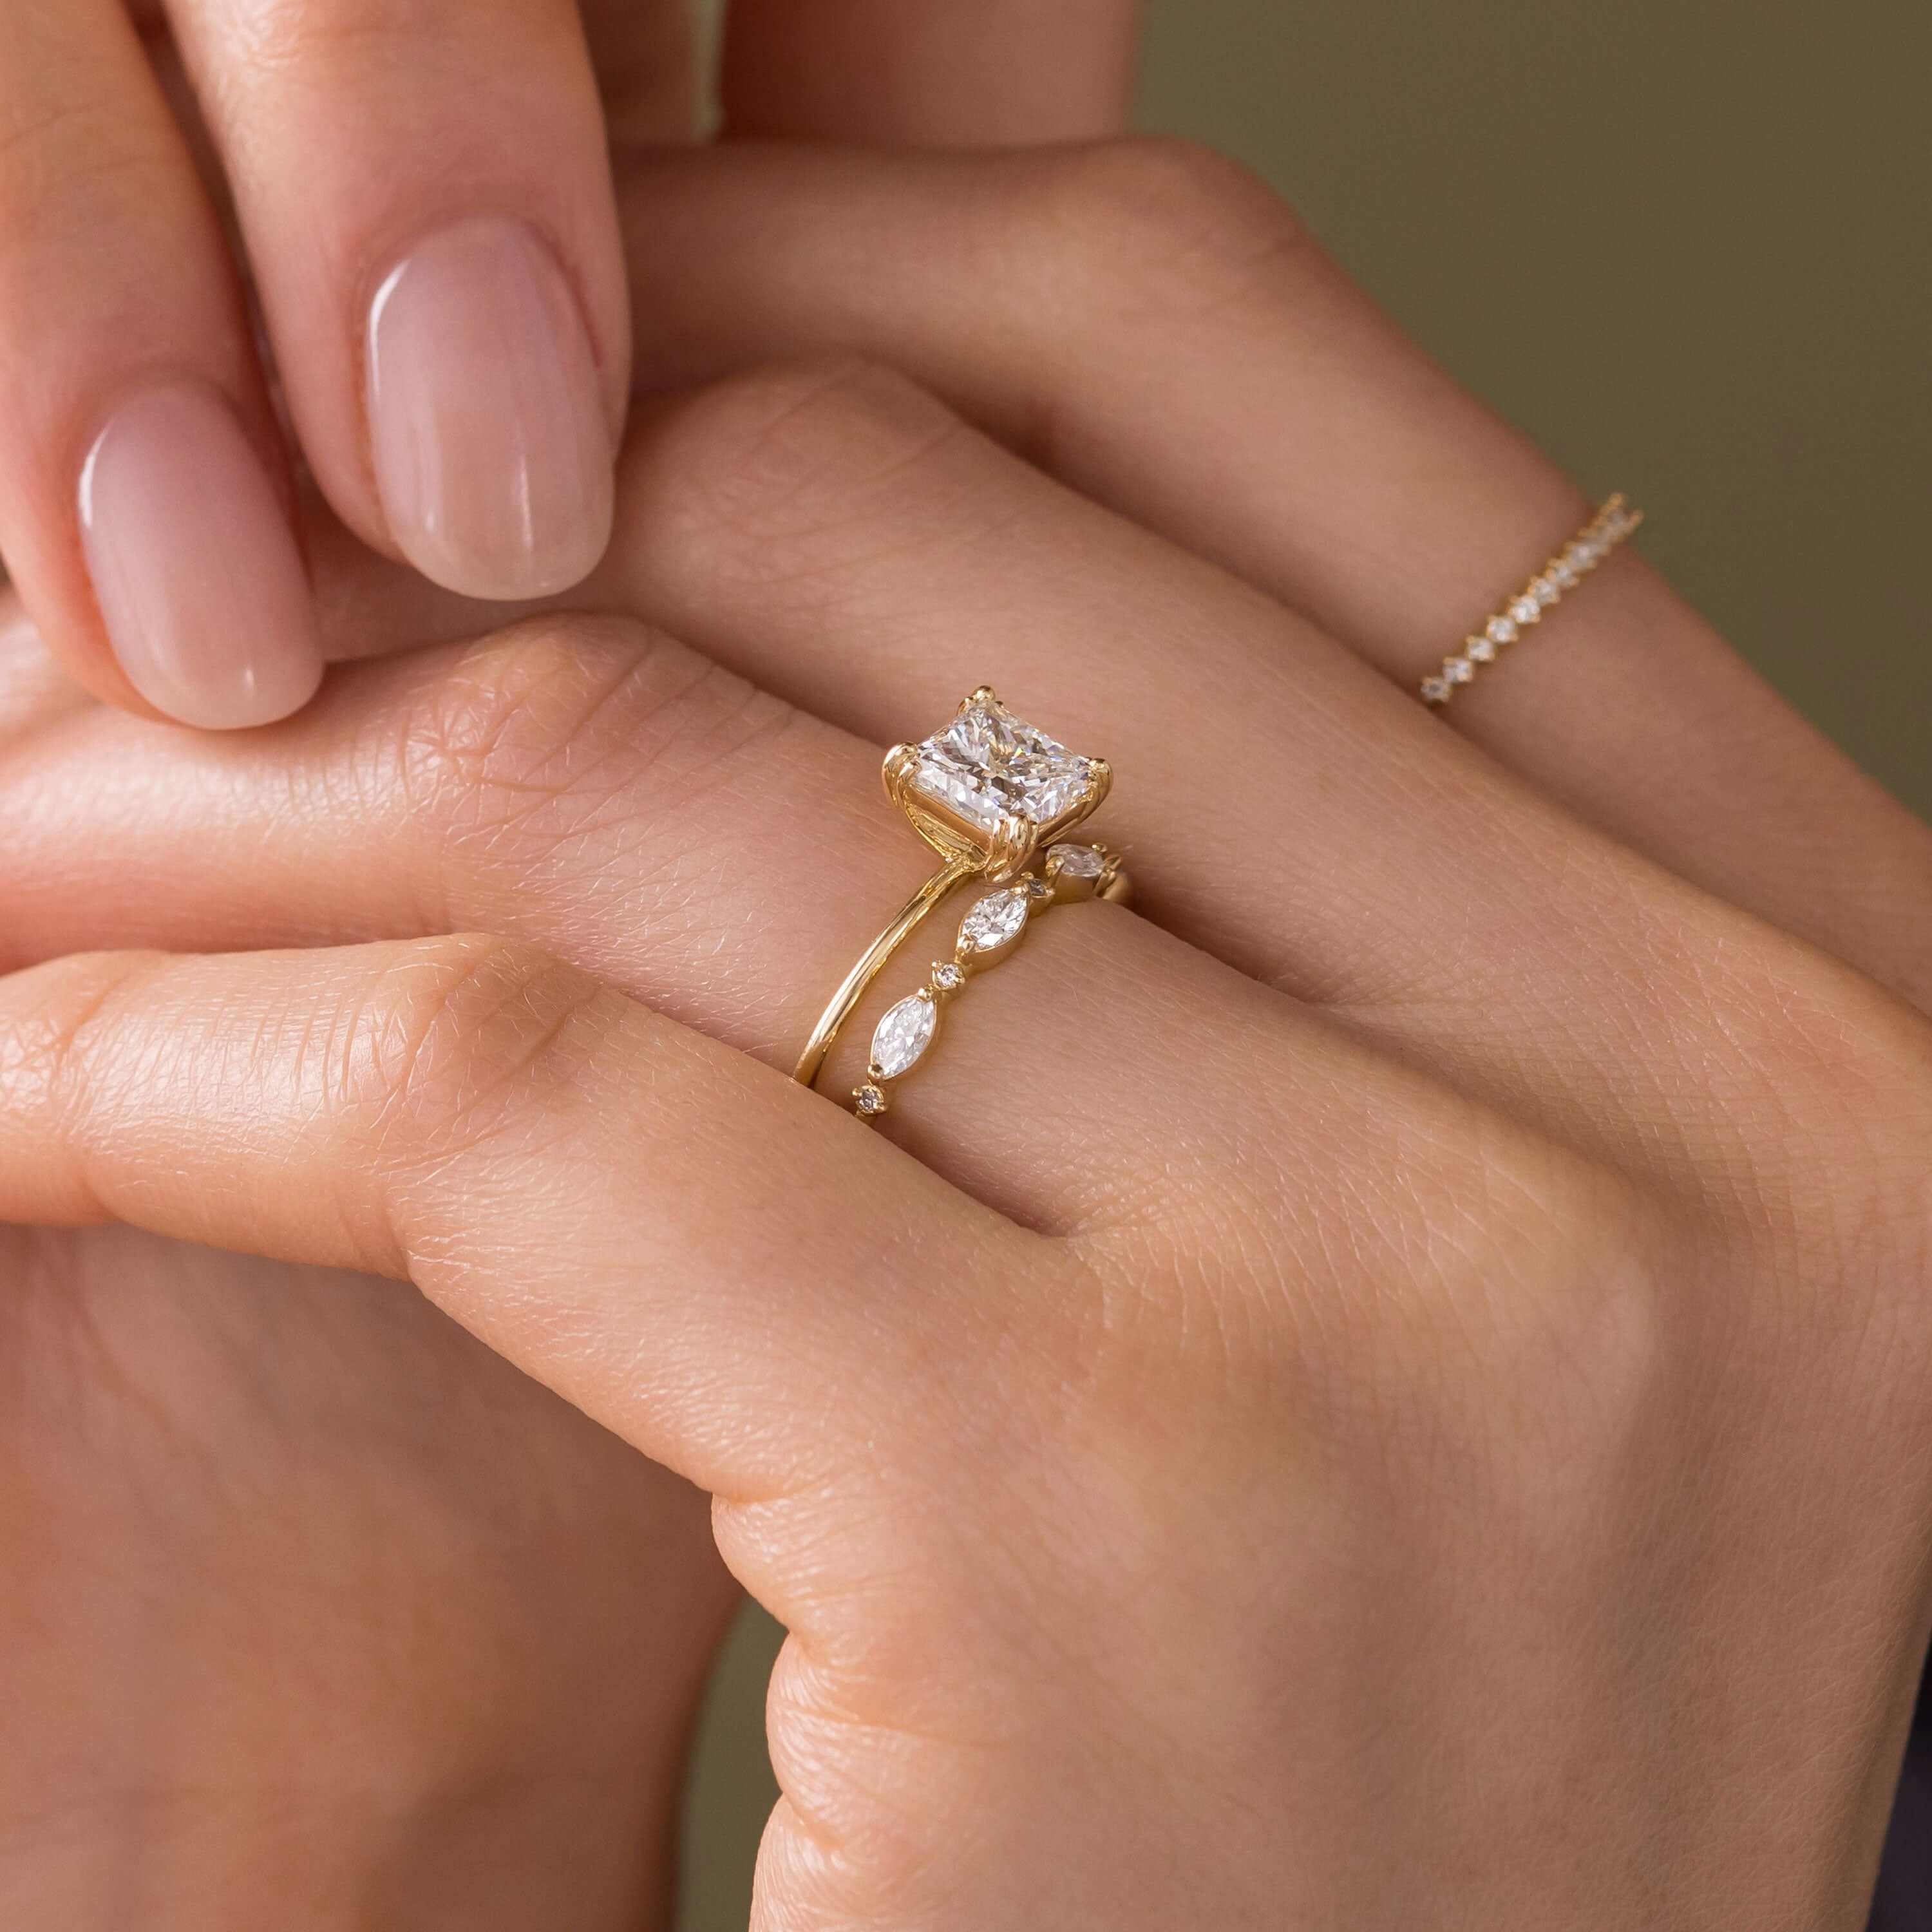 Elegant Princess-Cut Diamond Rings for Weddings and Engagements